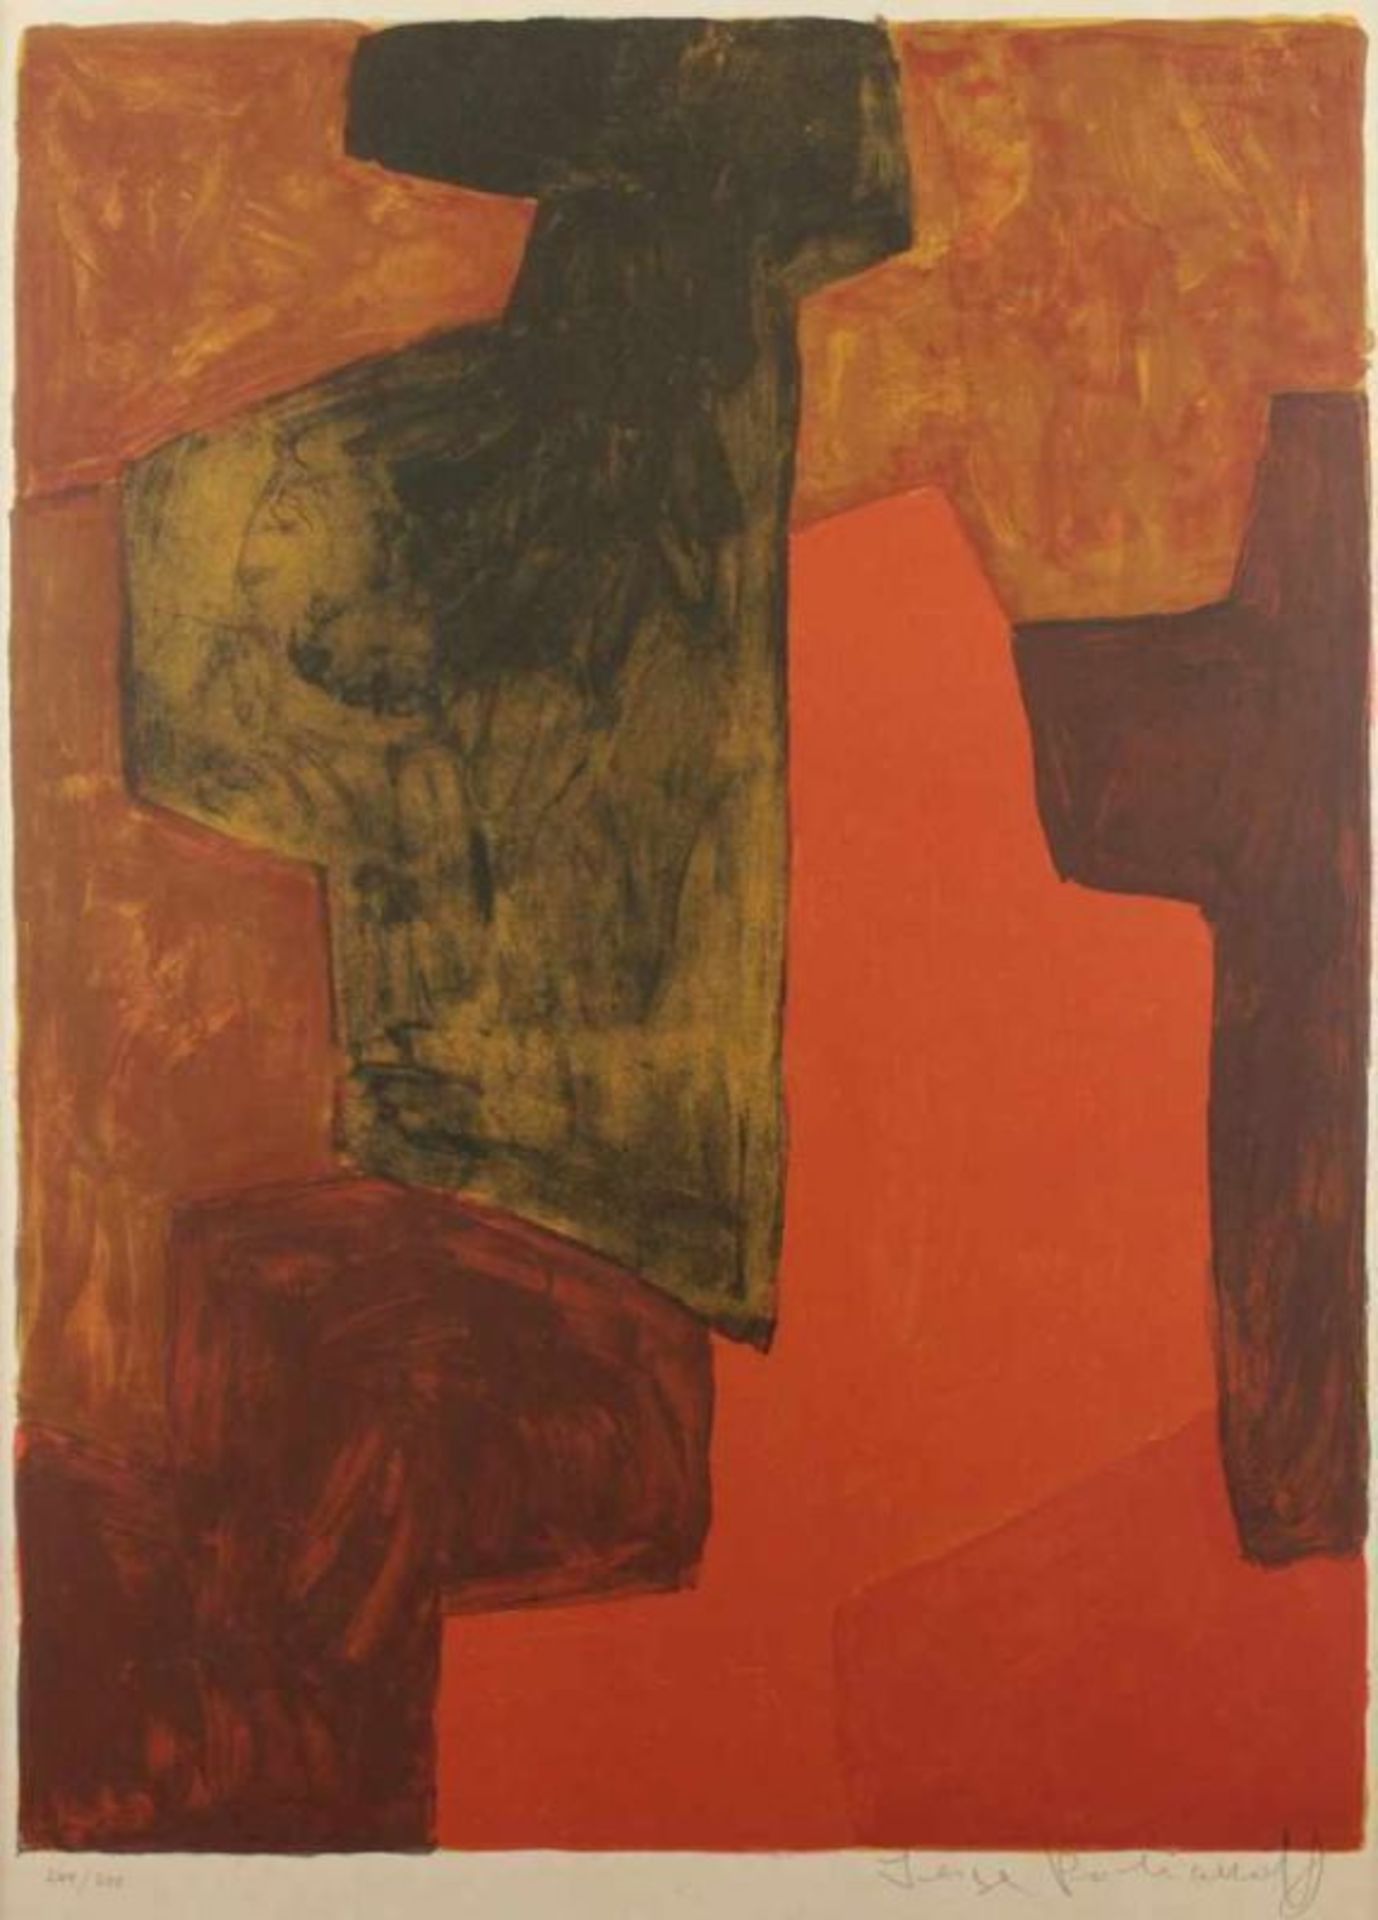 POLIAKOFF, Serge, "Composition orange et verte", 1964, Original-Farblithografie auf Velin. 60,8 x